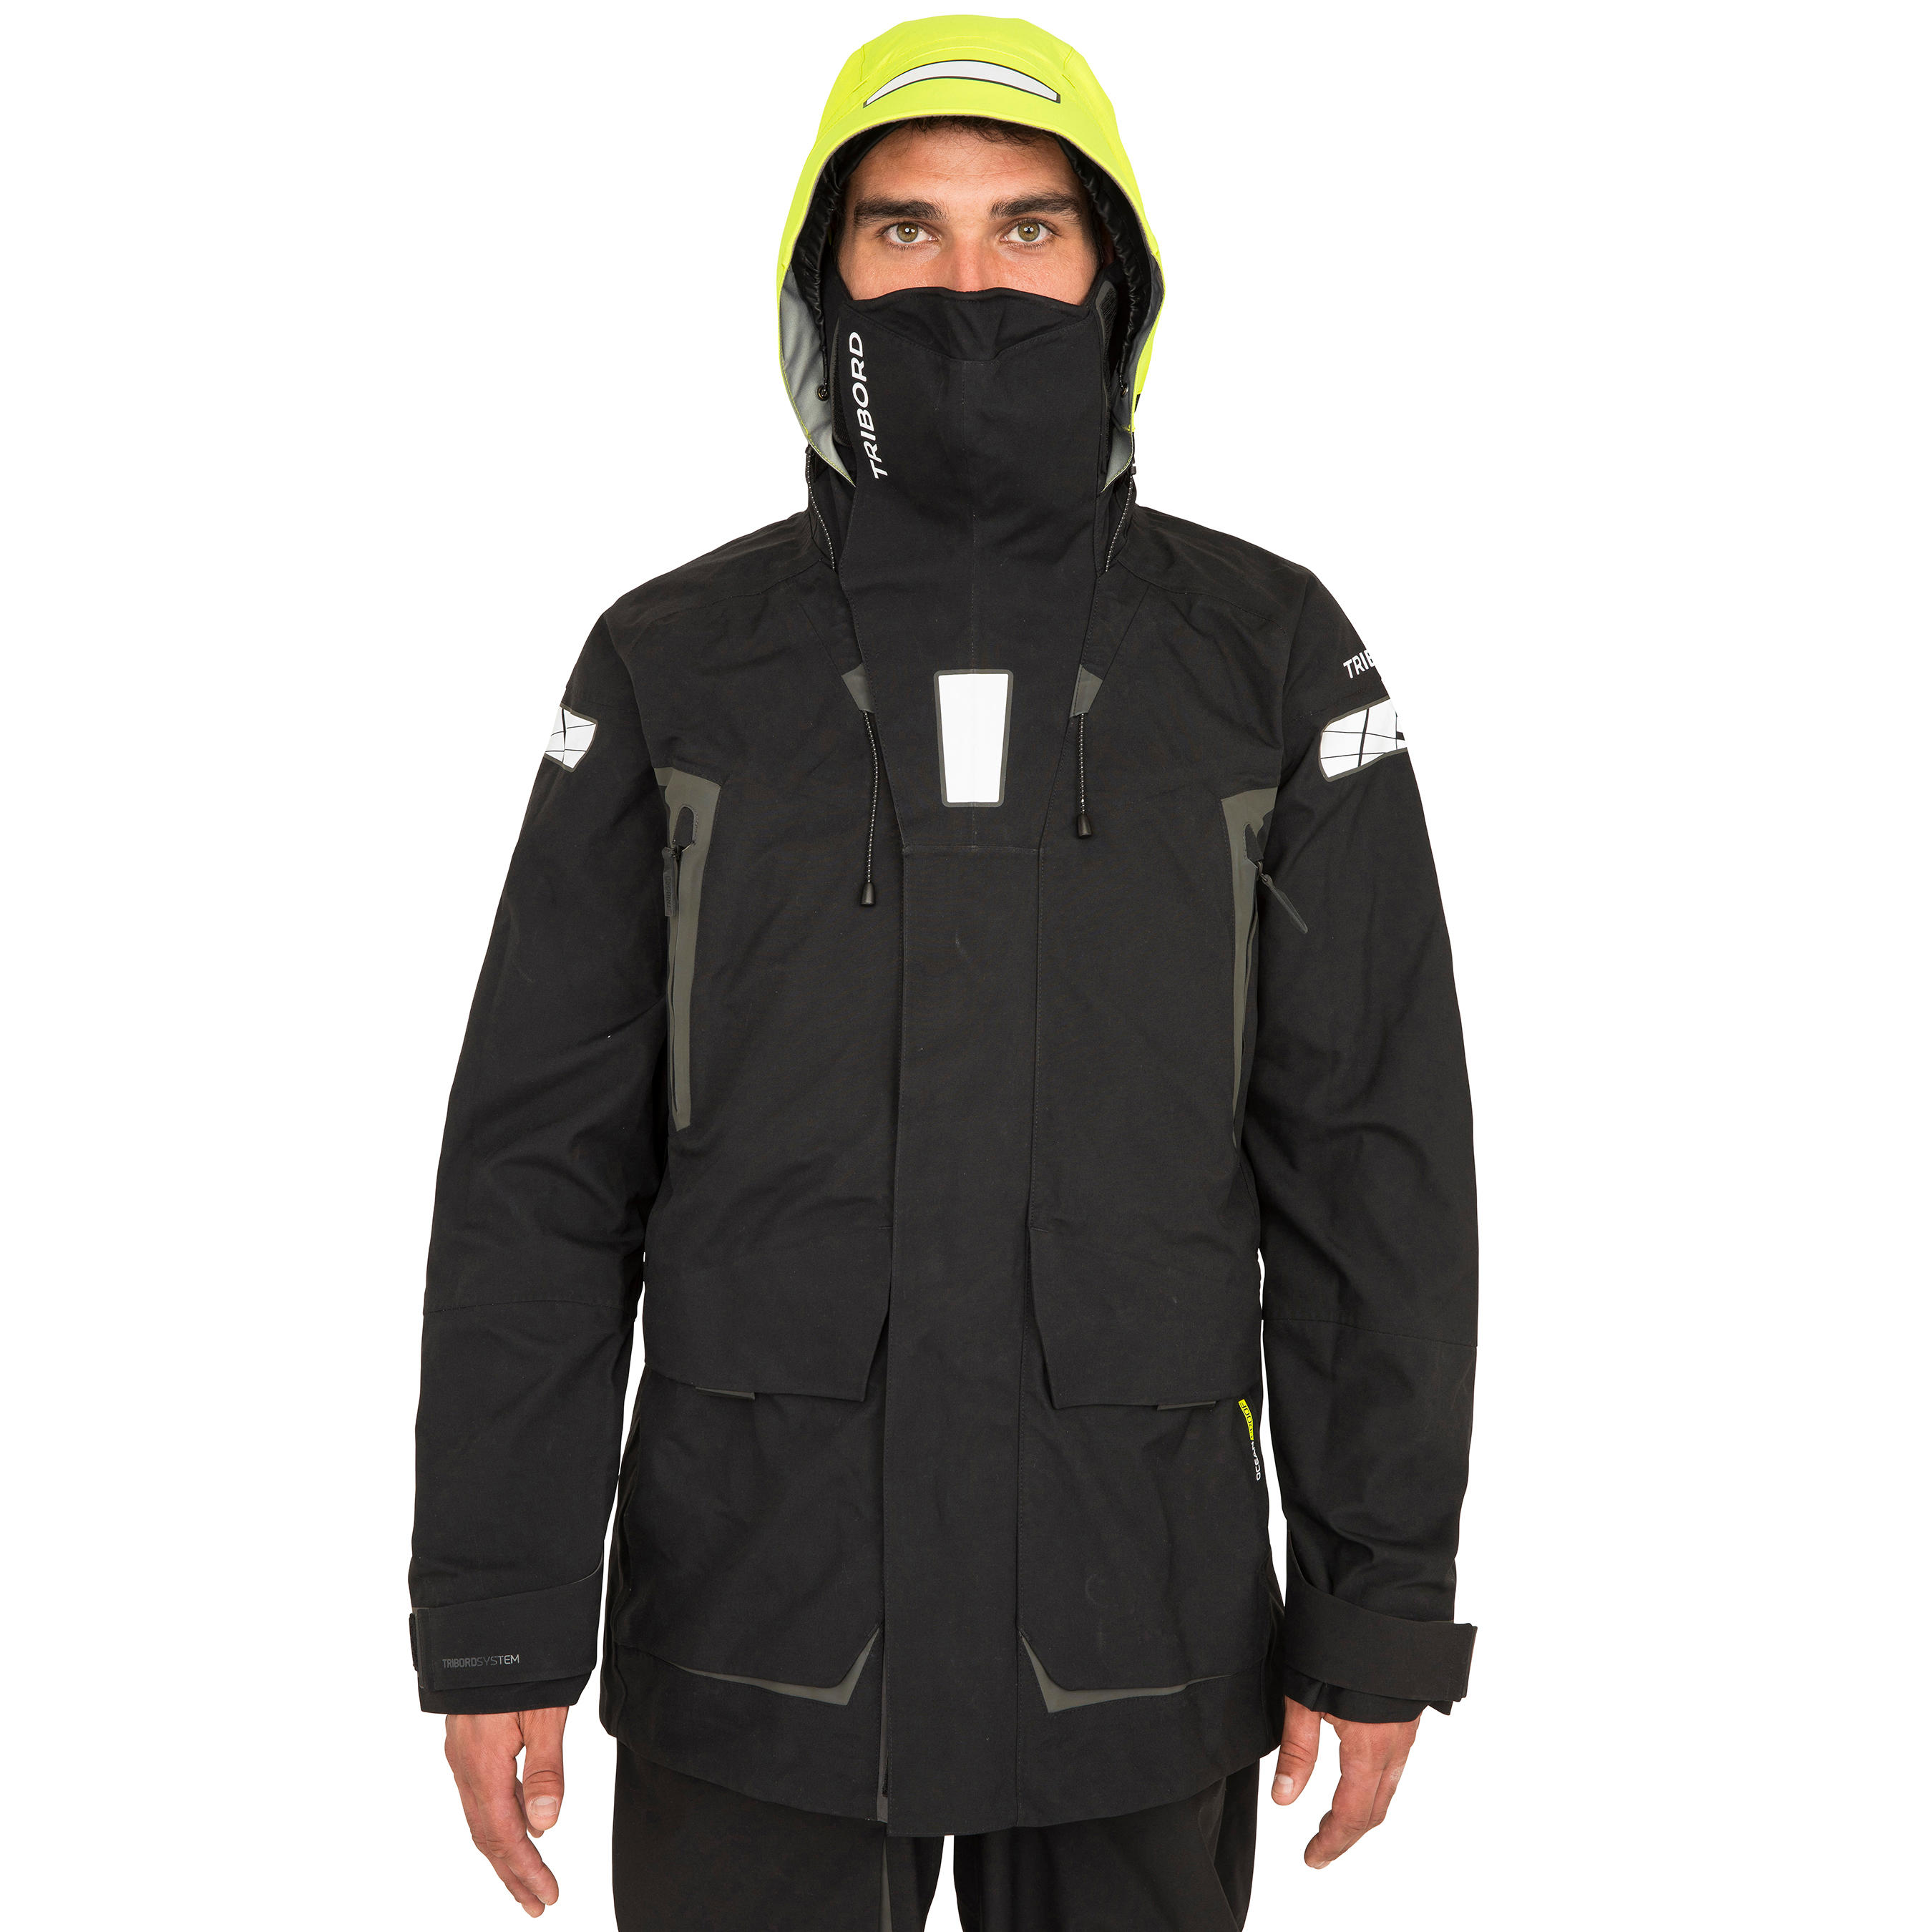 Men's OFFSHORE900 sailing jacket - Black 2/16